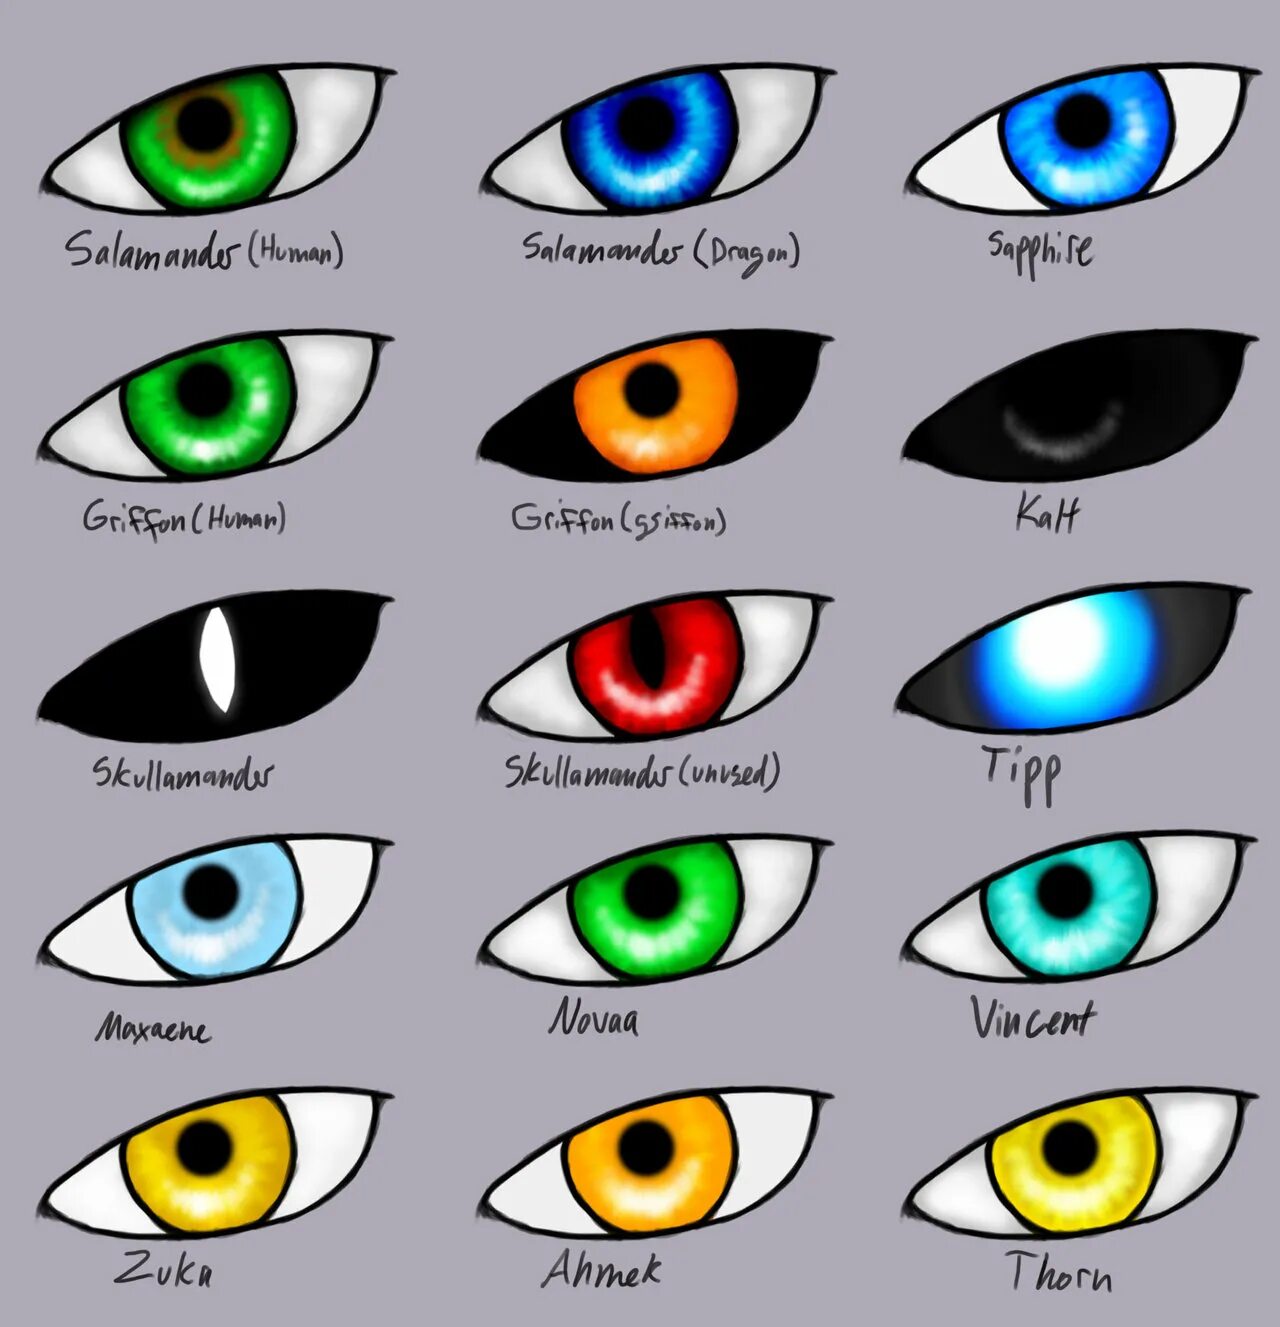 Какого цвета глазки